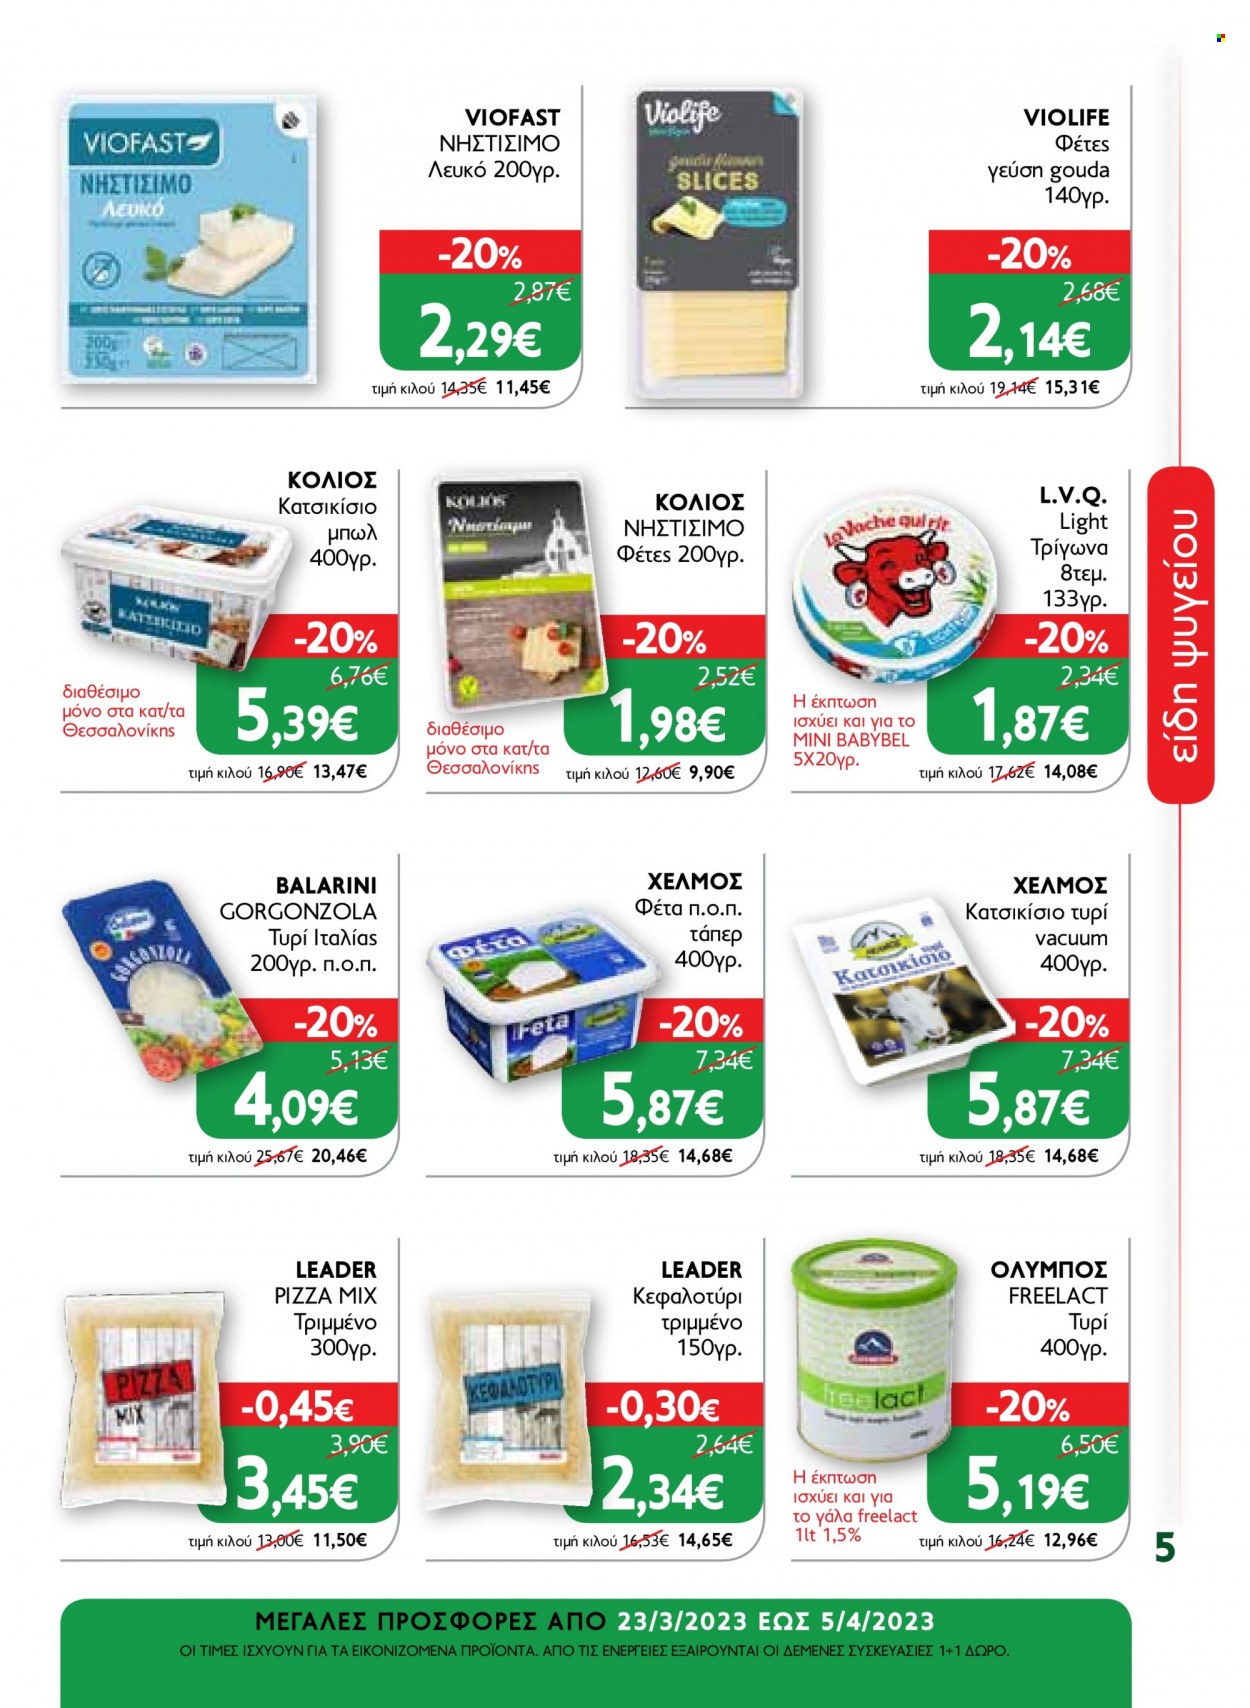 thumbnail - Φυλλάδια OK! Markets - 23.03.2023 - 05.04.2023 - Εκπτωτικά προϊόντα - gouda, κατσικίσιο τυρί, γάλα, μπολ. Σελίδα 5.